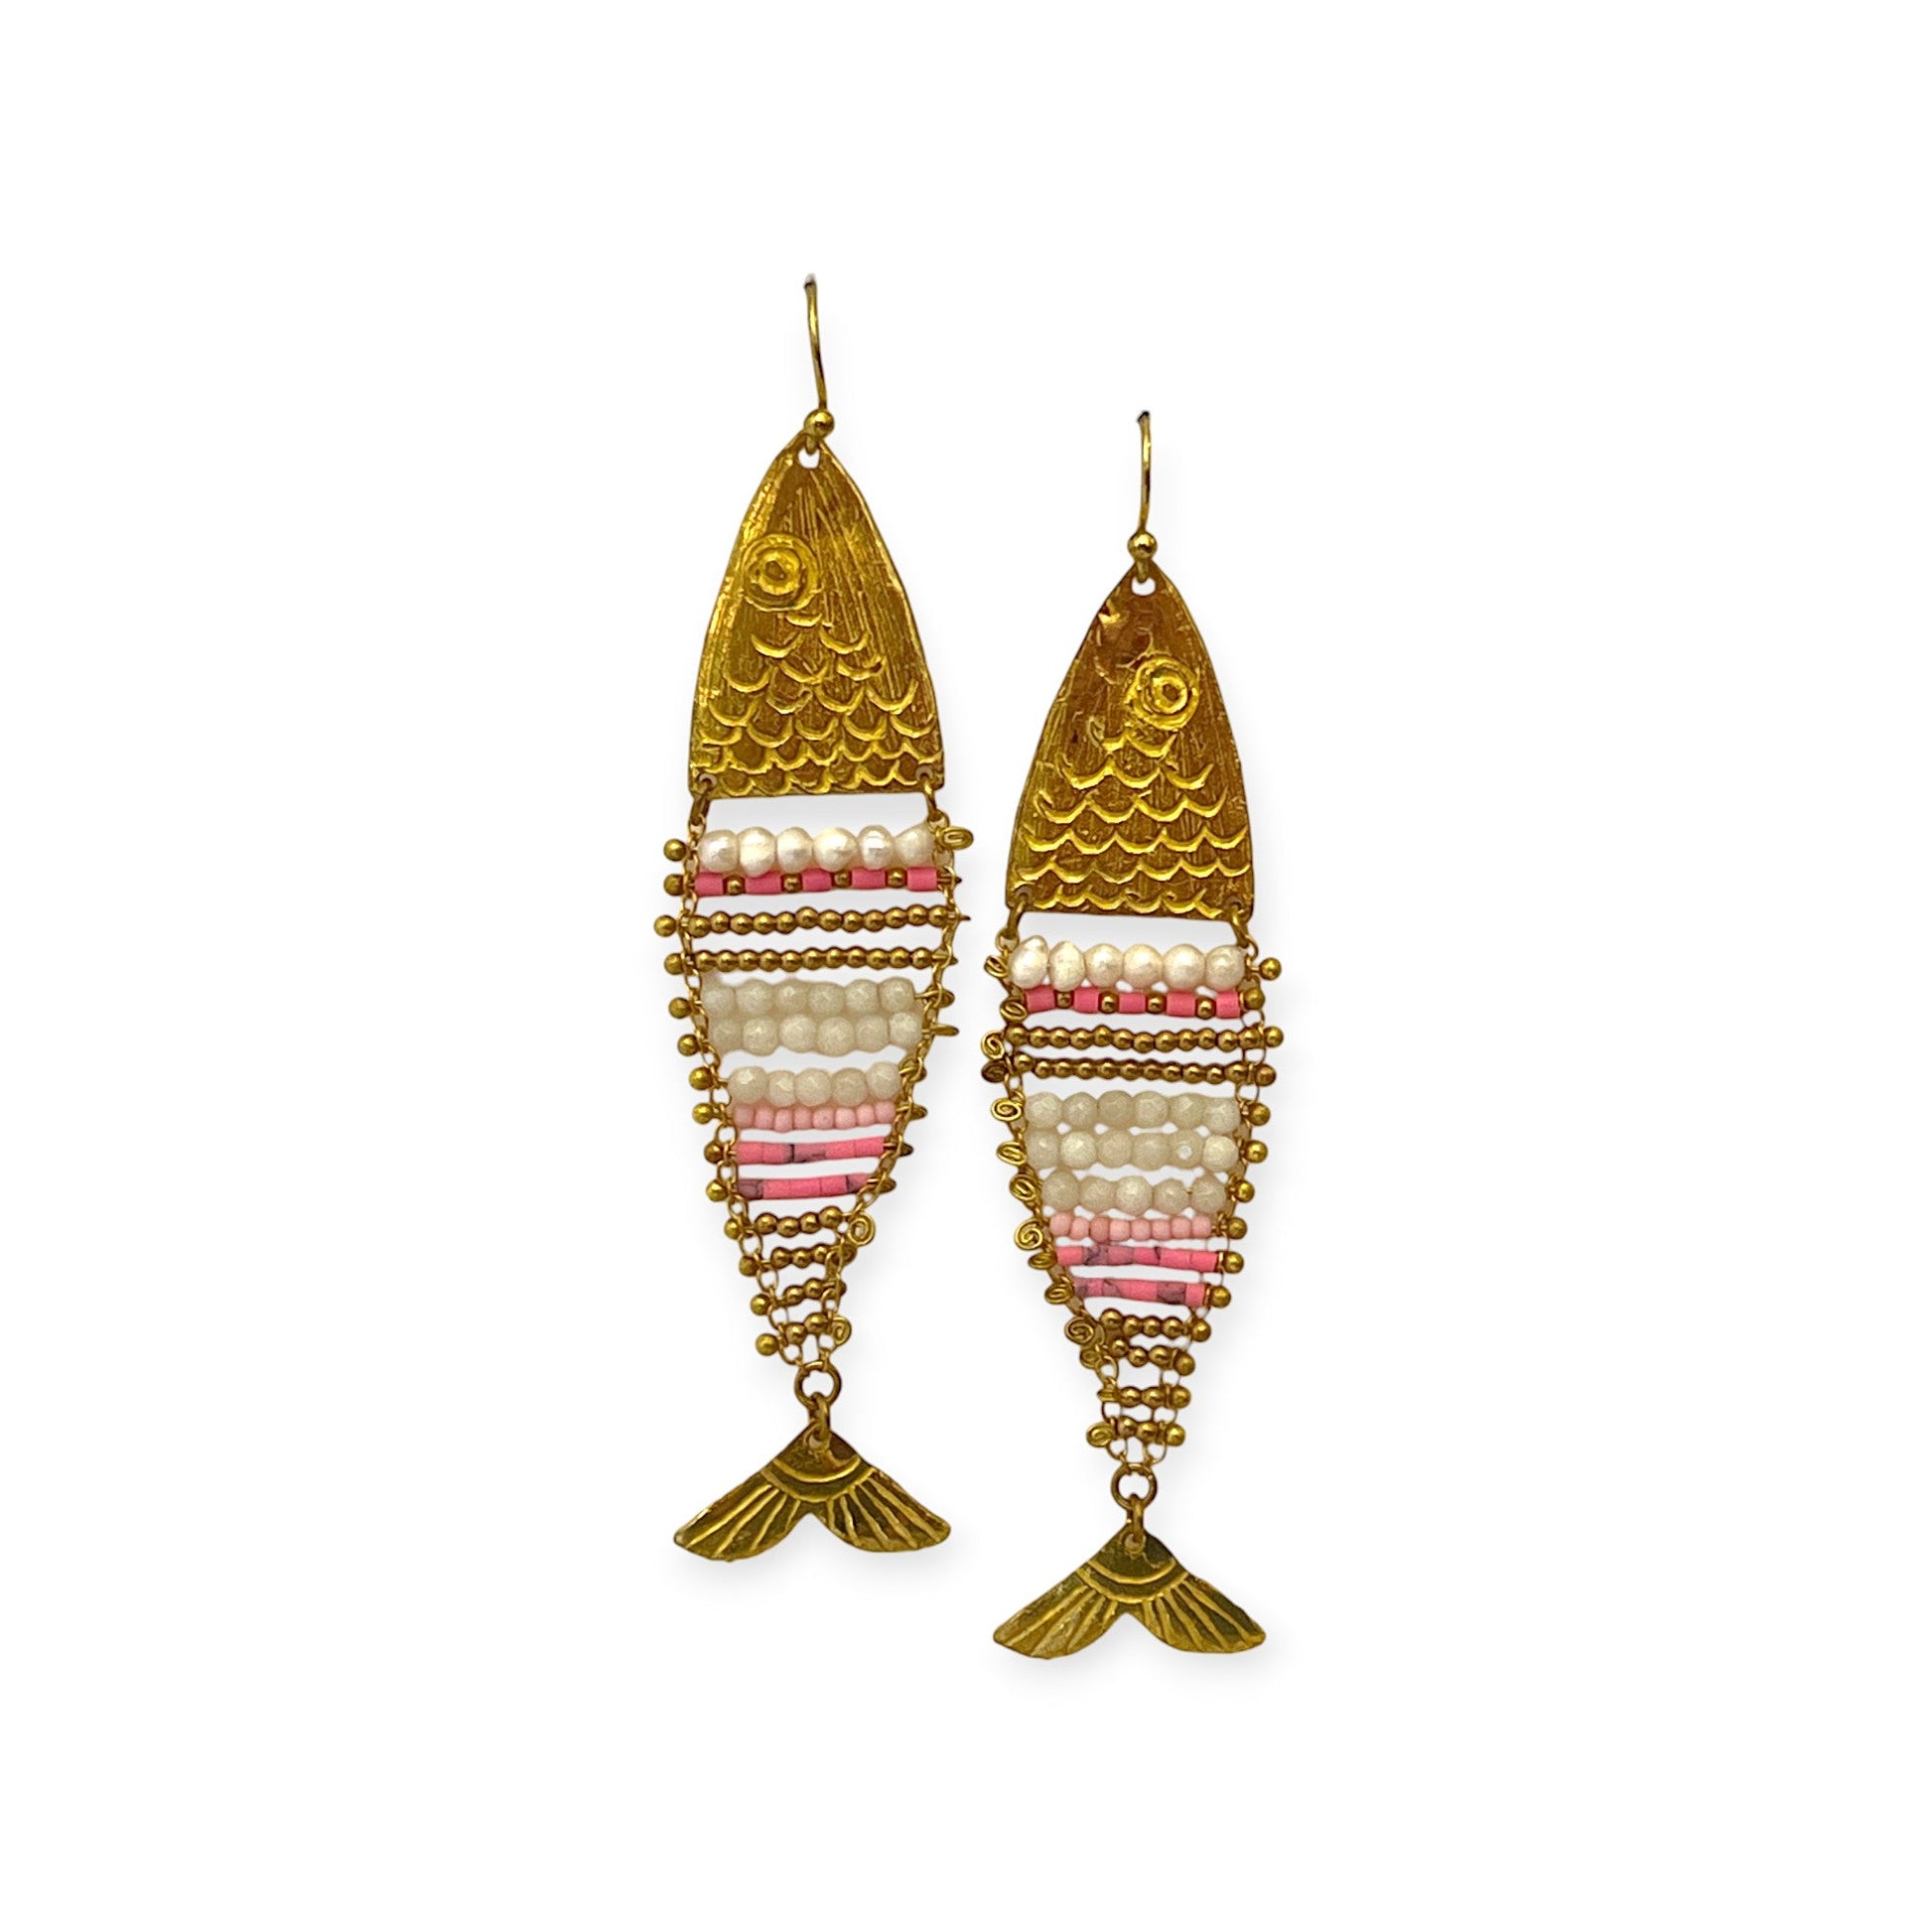 Fish inspired beaded drop statement earrings - Sundara Joon